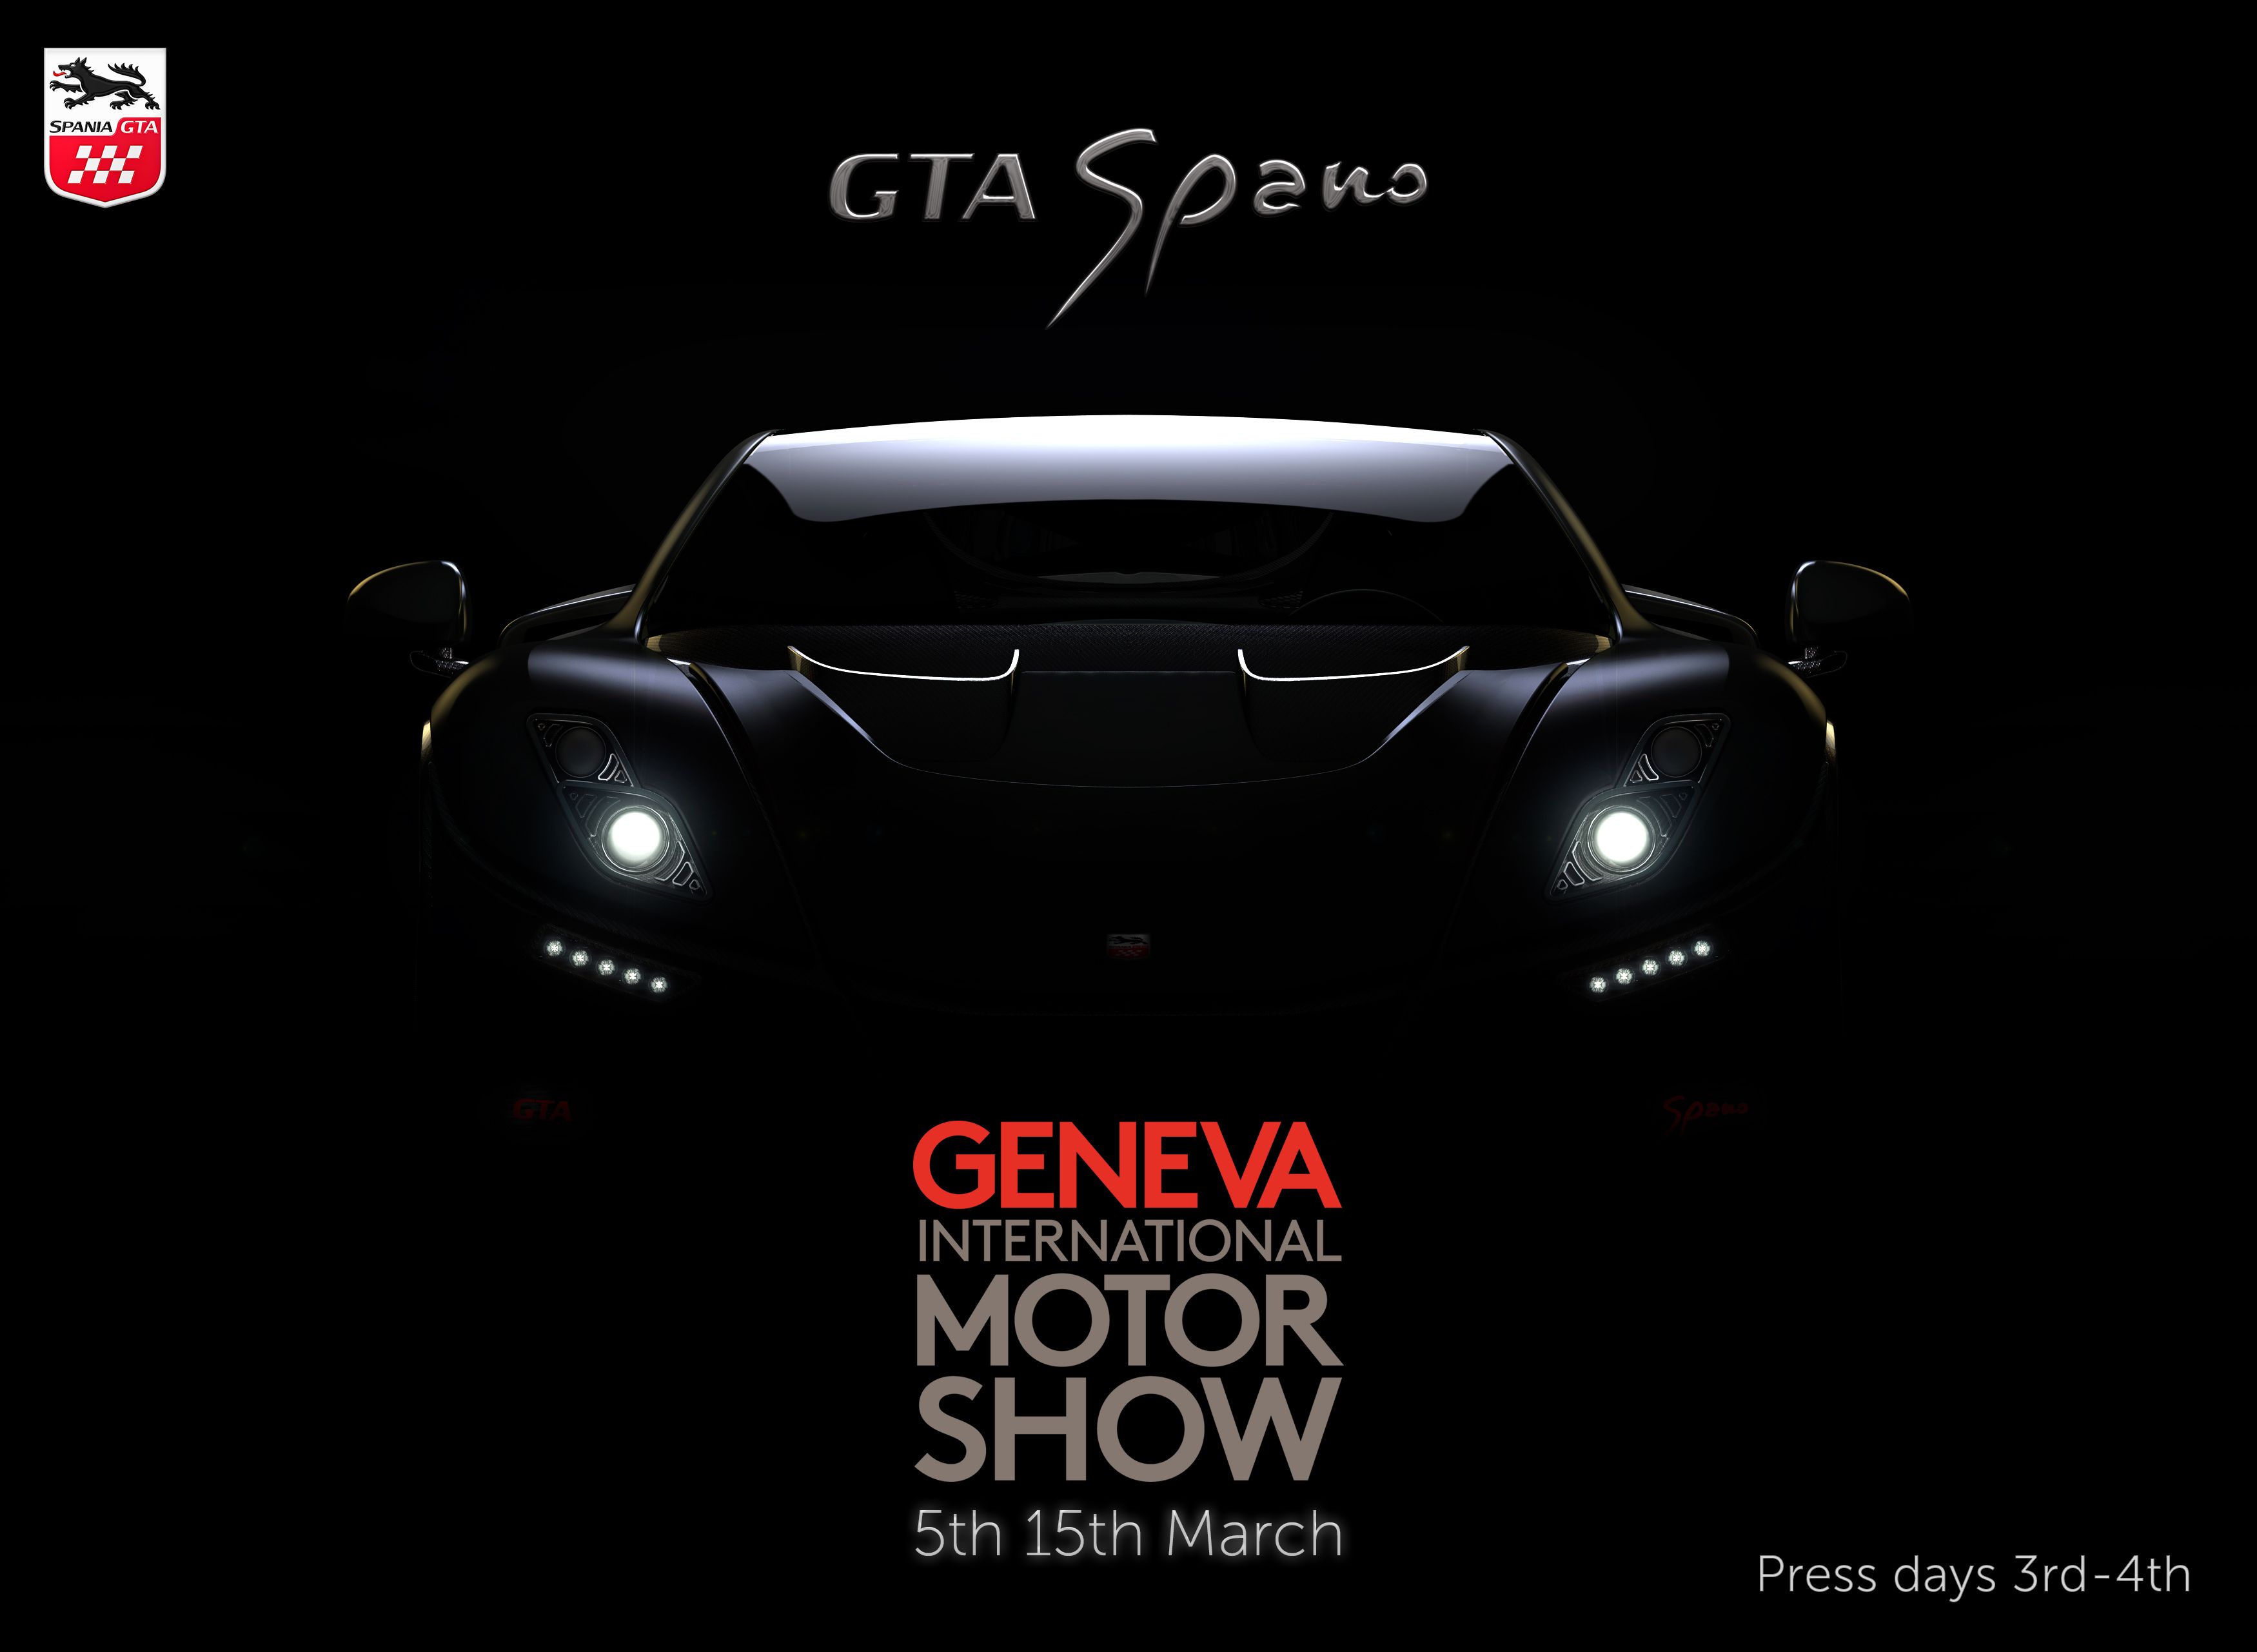 2015 GTA Spano